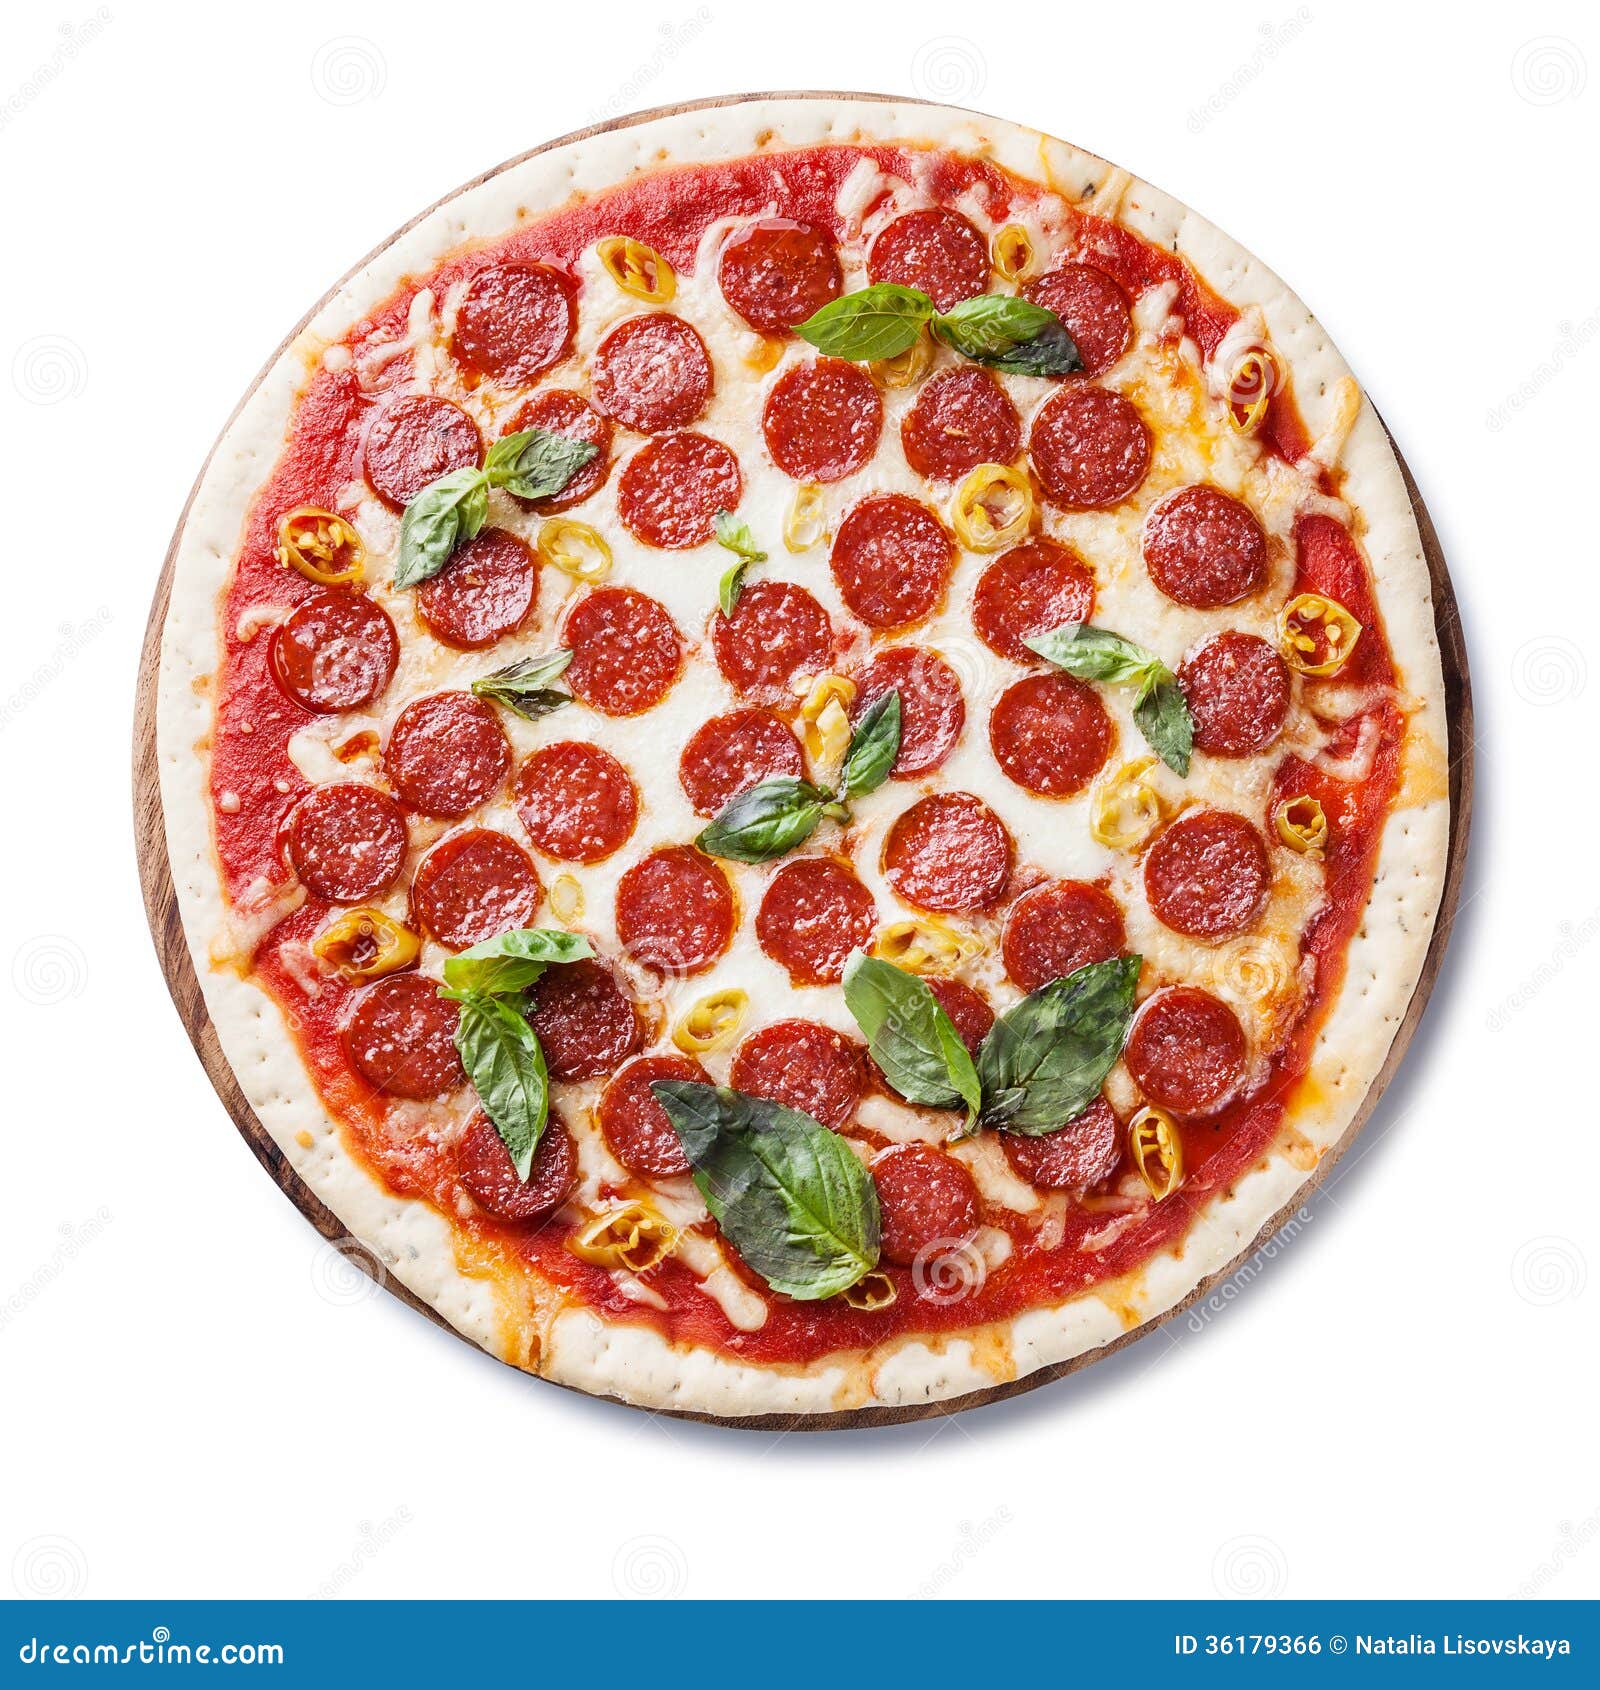 пицца пепперони фото на белом фоне фото 36